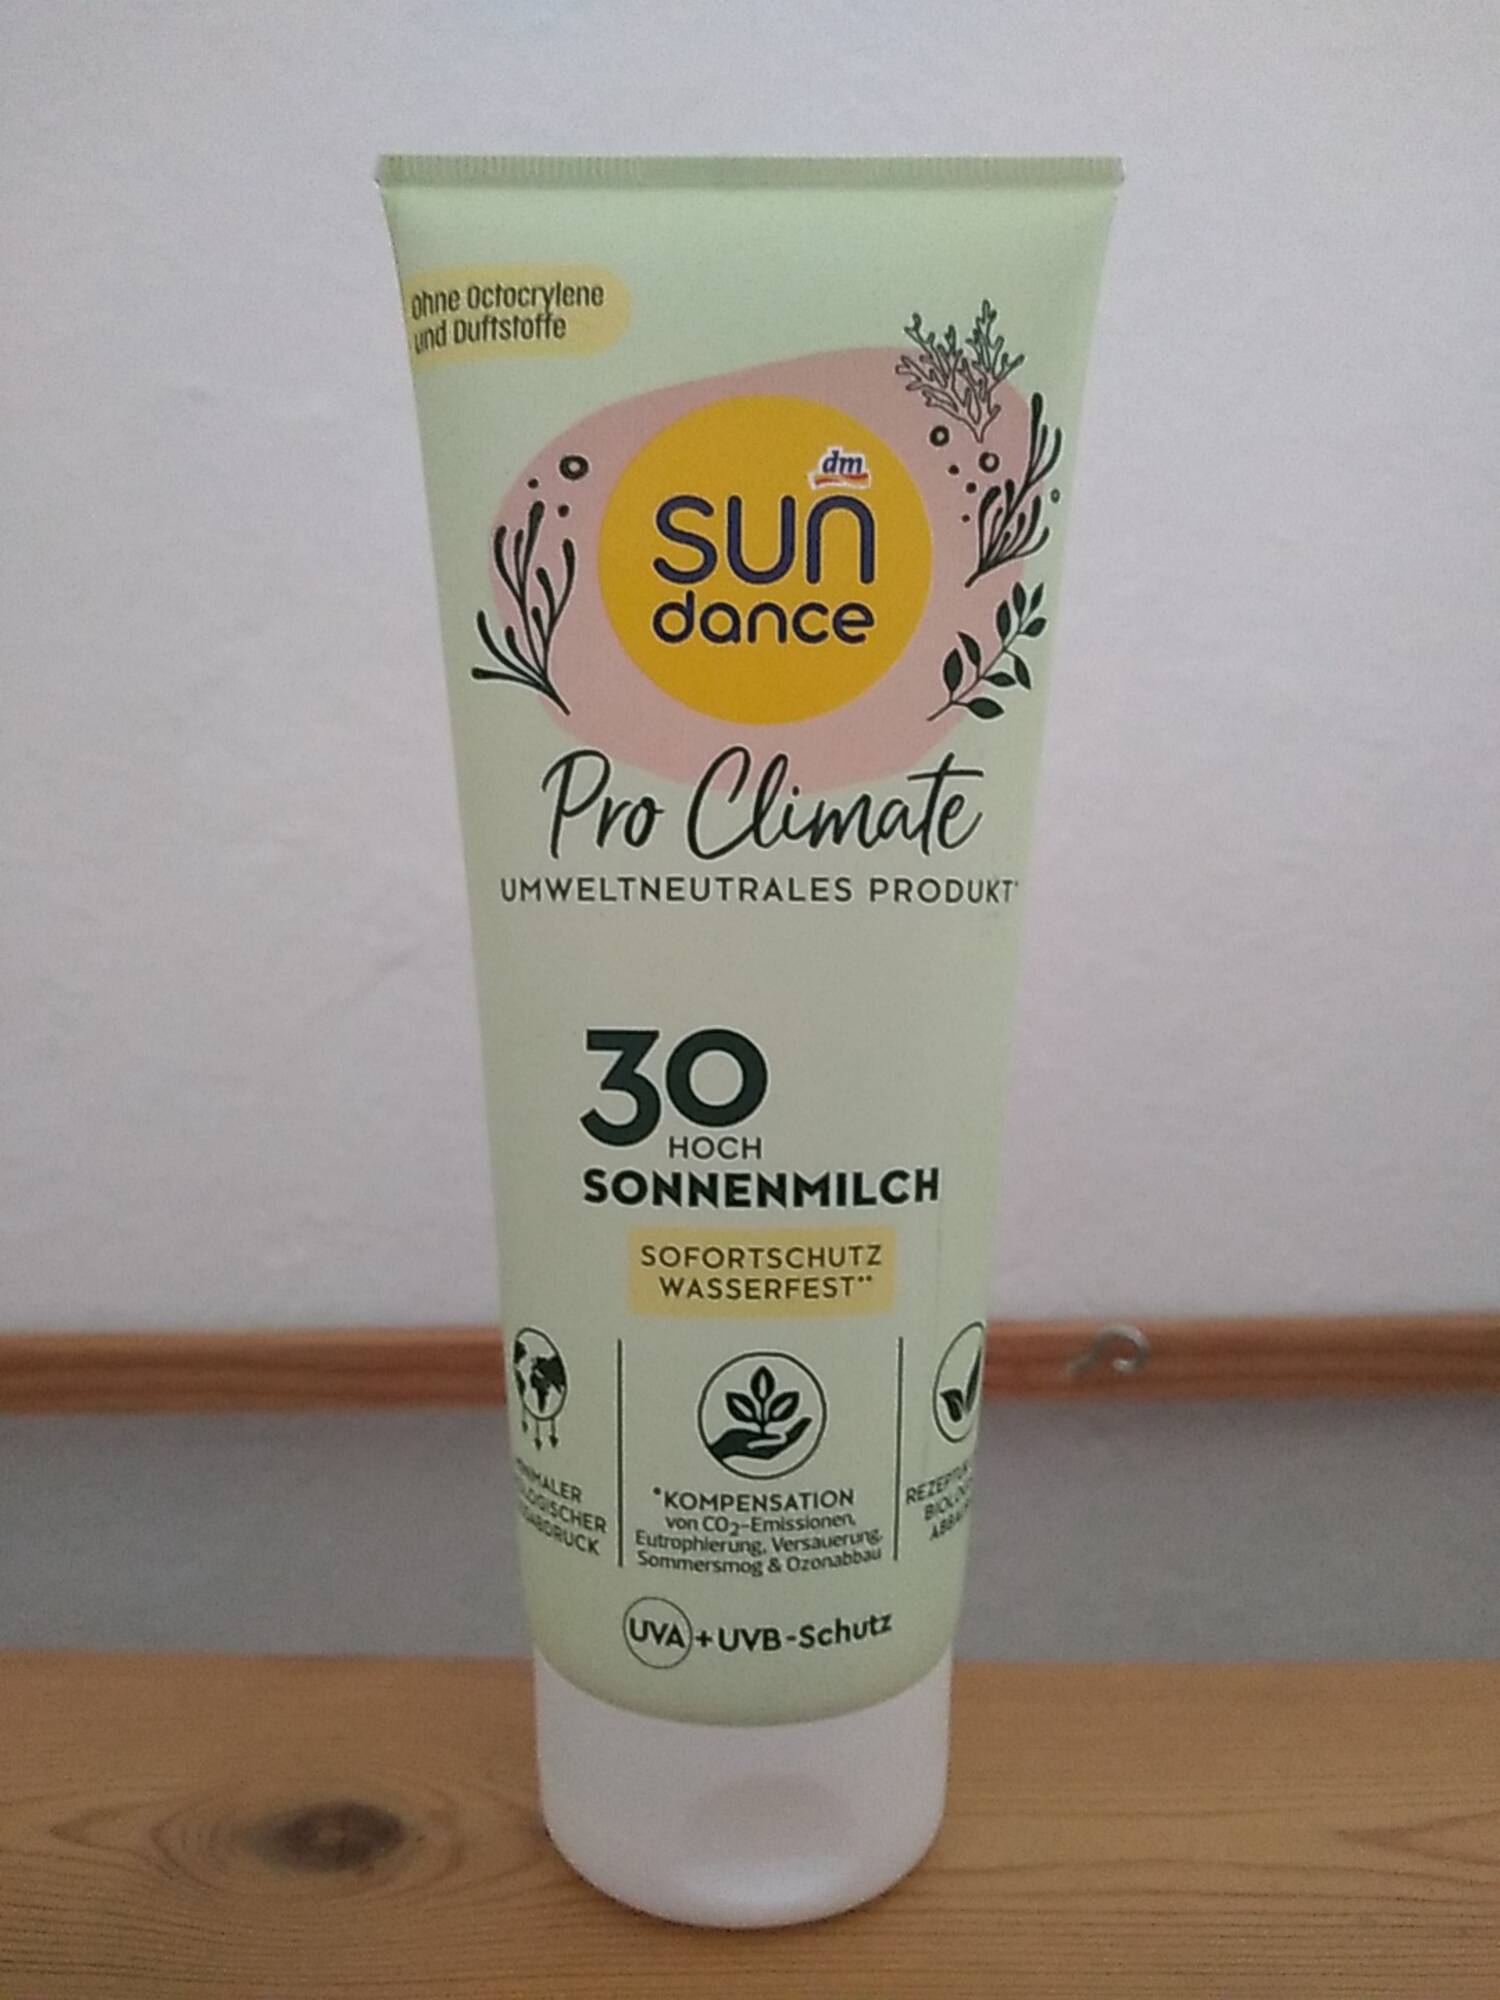 SUNDANCE - Pro climate - Sonnenmilch 30 hoch